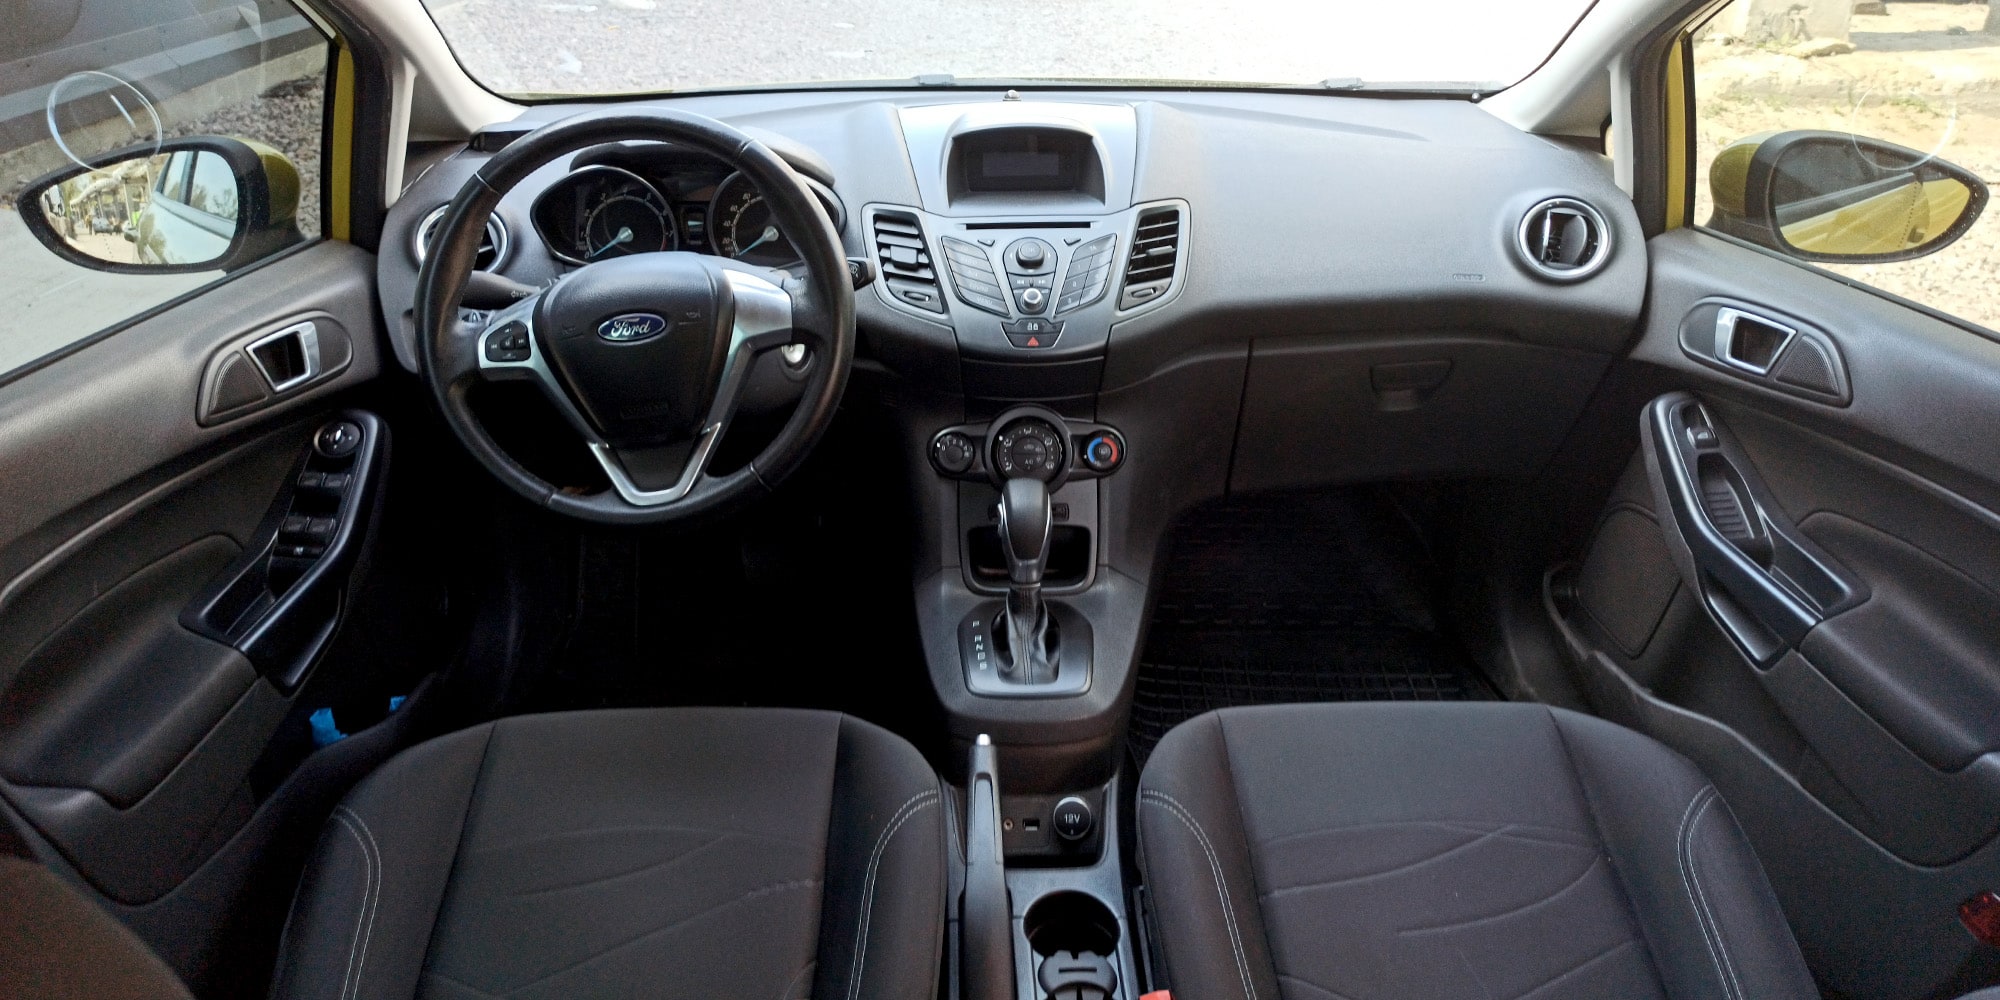 Ford Fiesta auto - TopRent: Служба аренды авто в Киеве